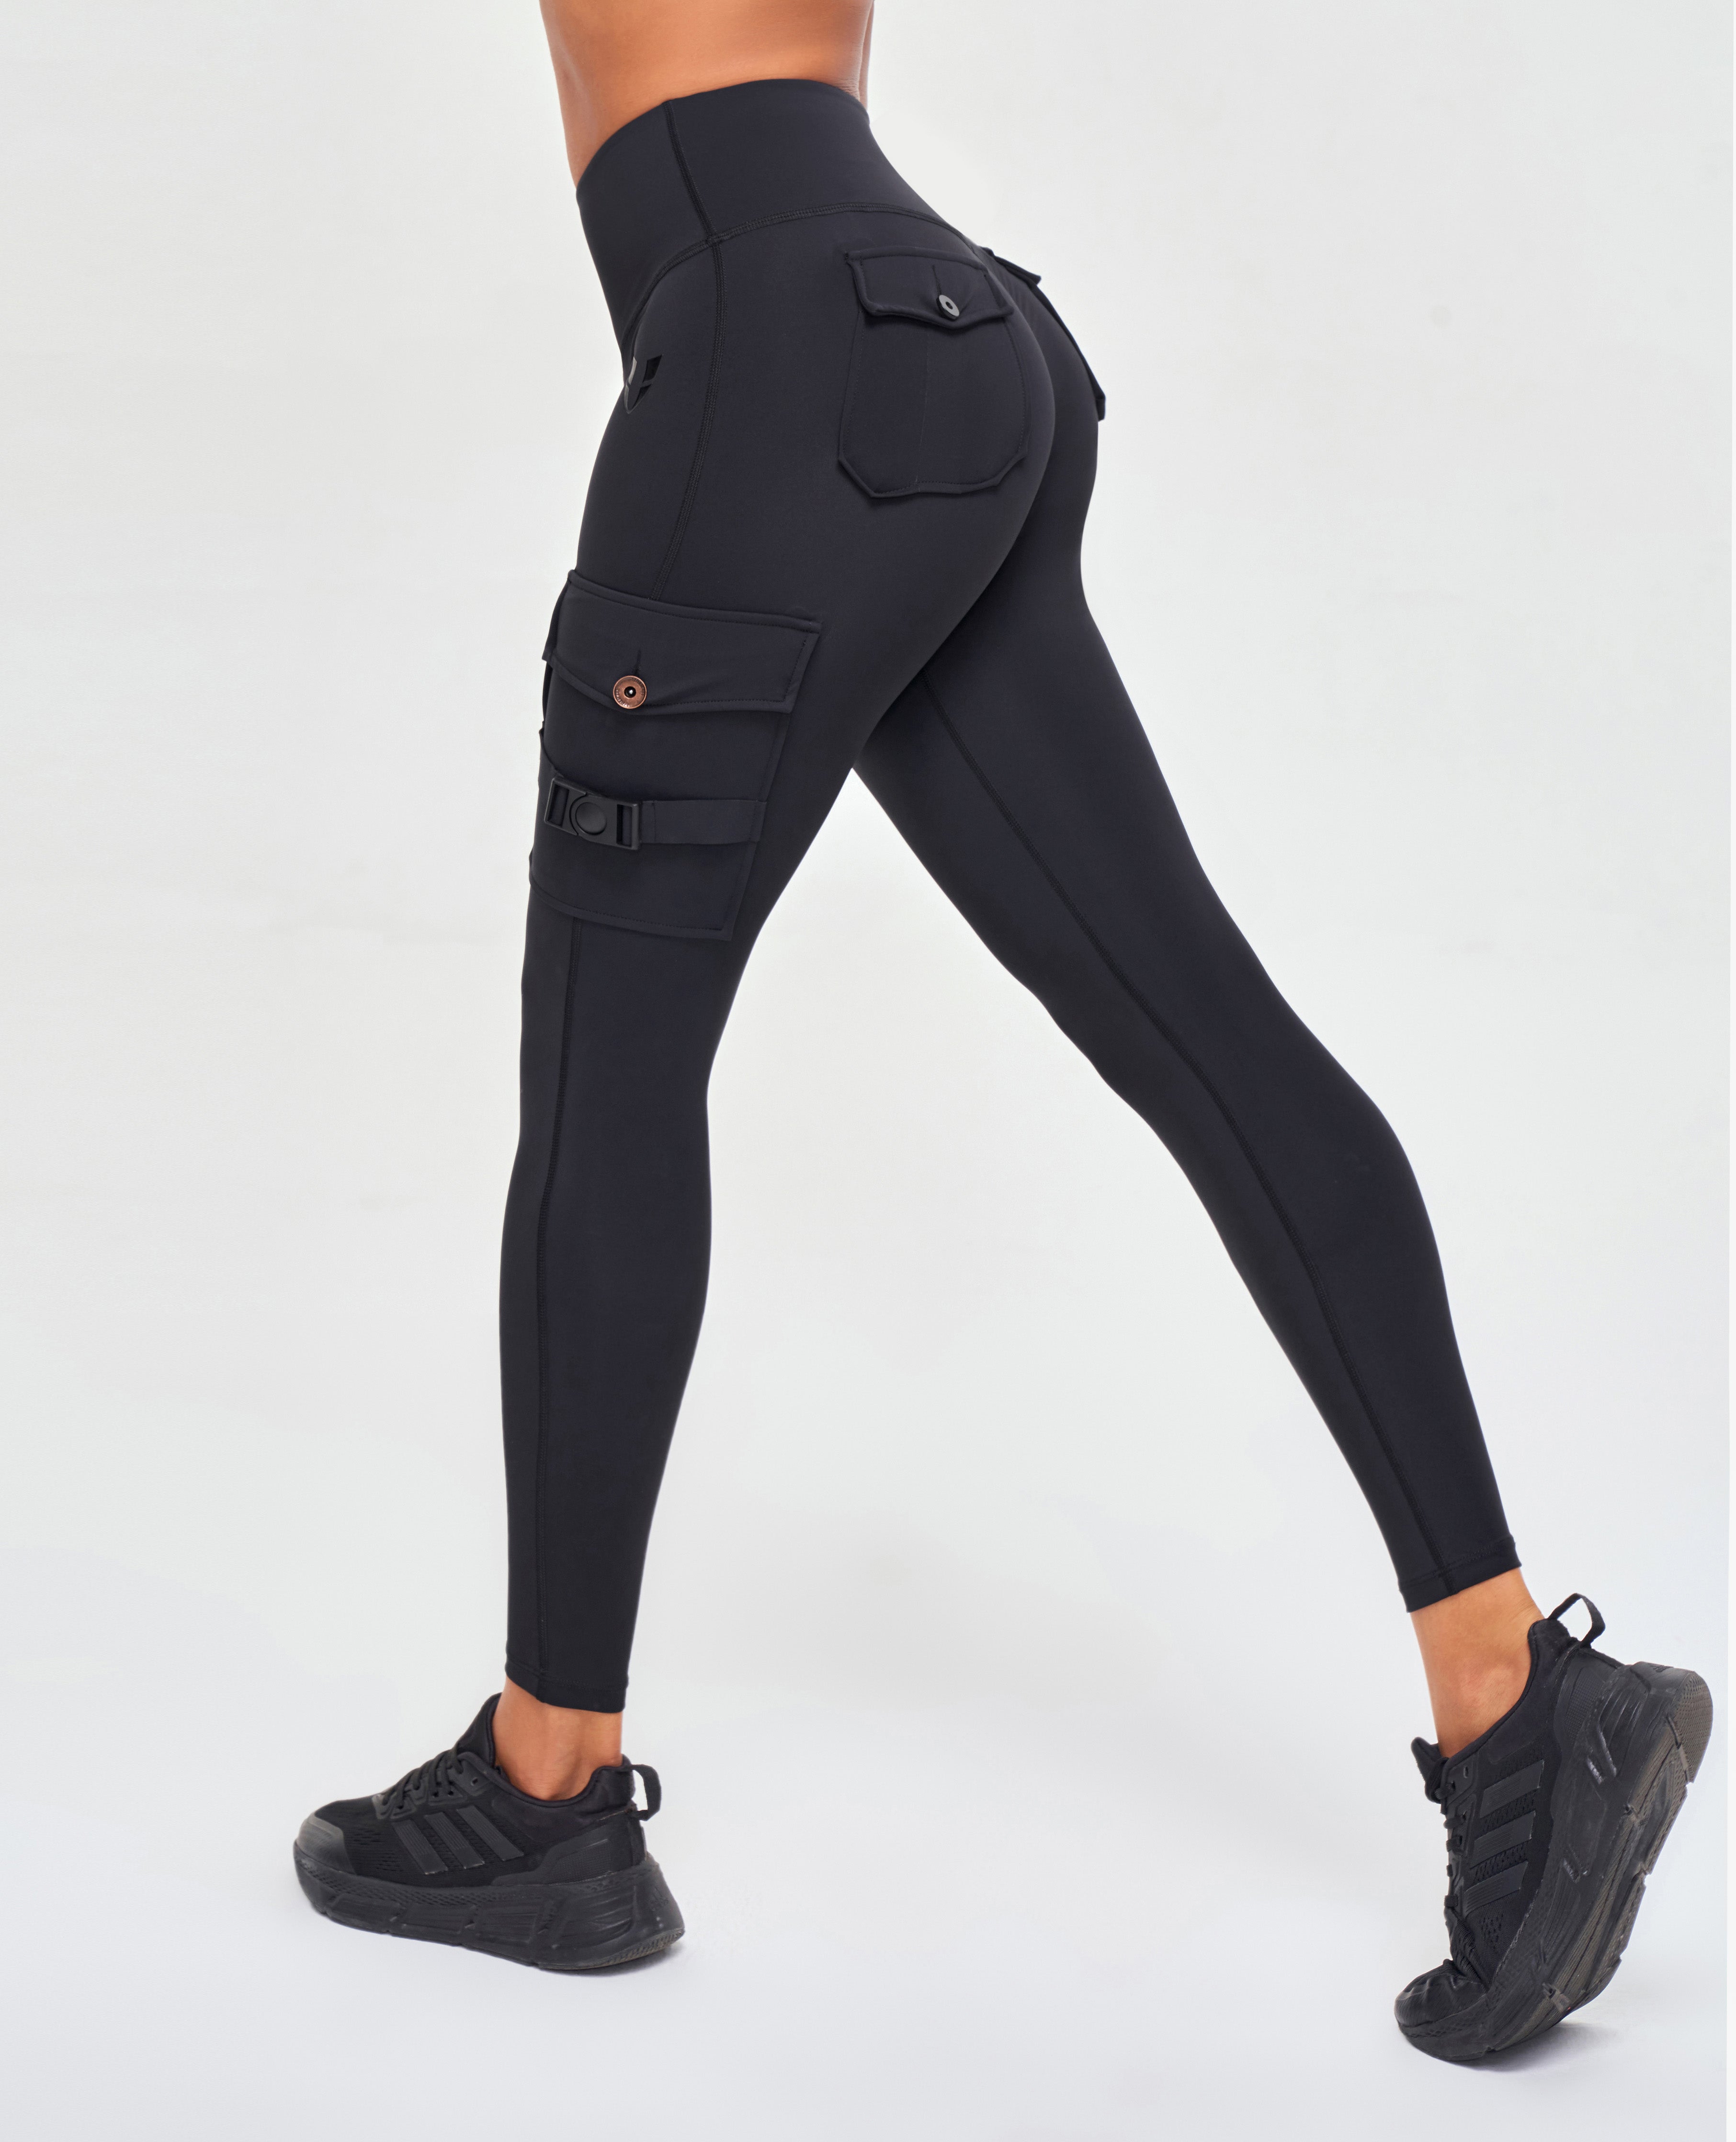 Sexy Dark Grey Women's Workout Cargo Leggings with Pockets